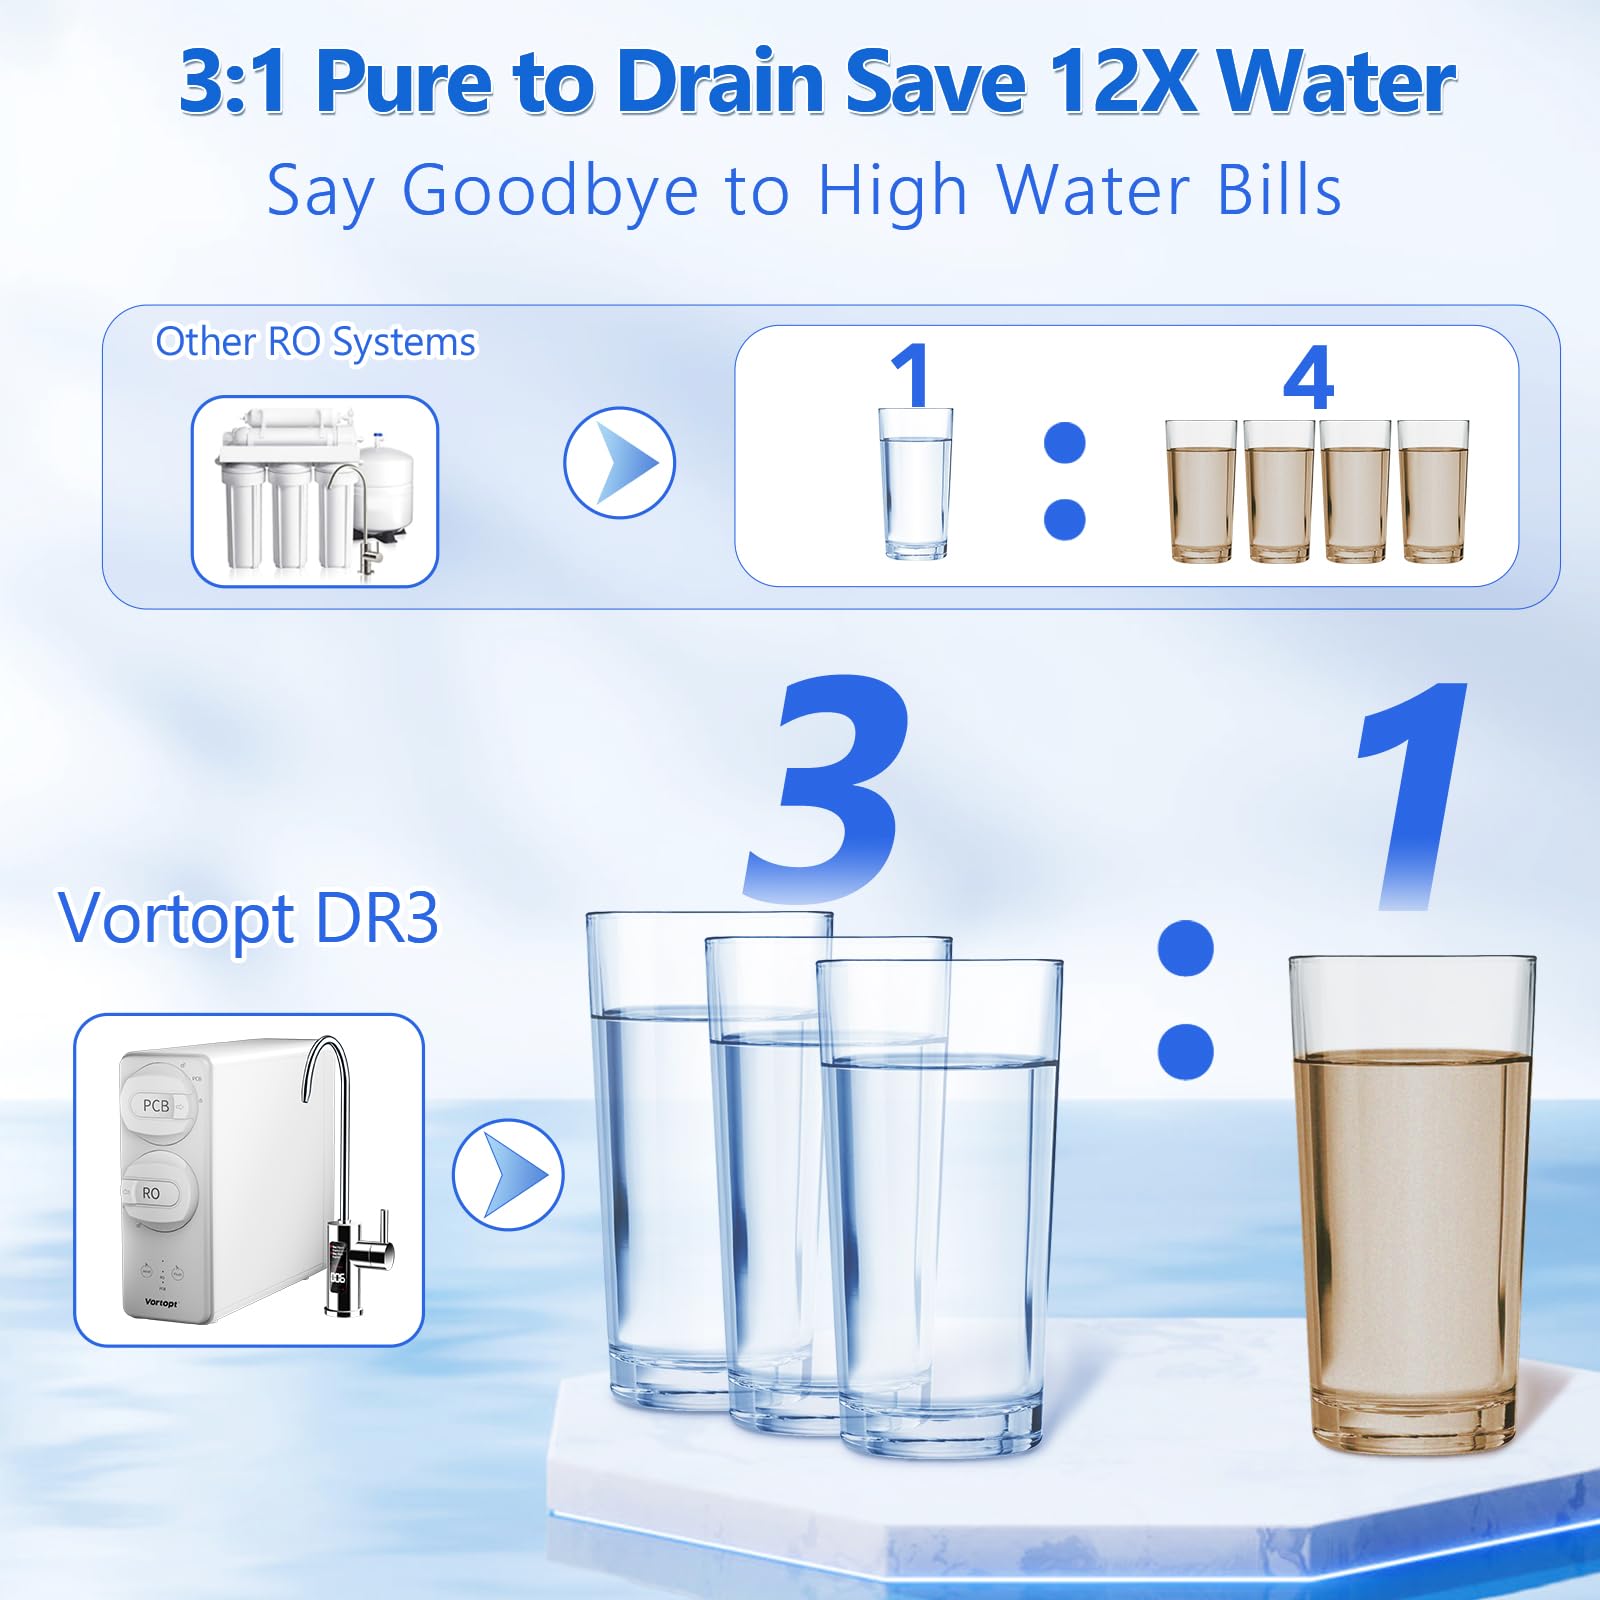  DR3-Vortopt Reverse Osmosis System - 600 GPD Under Sink RO Water Filter 